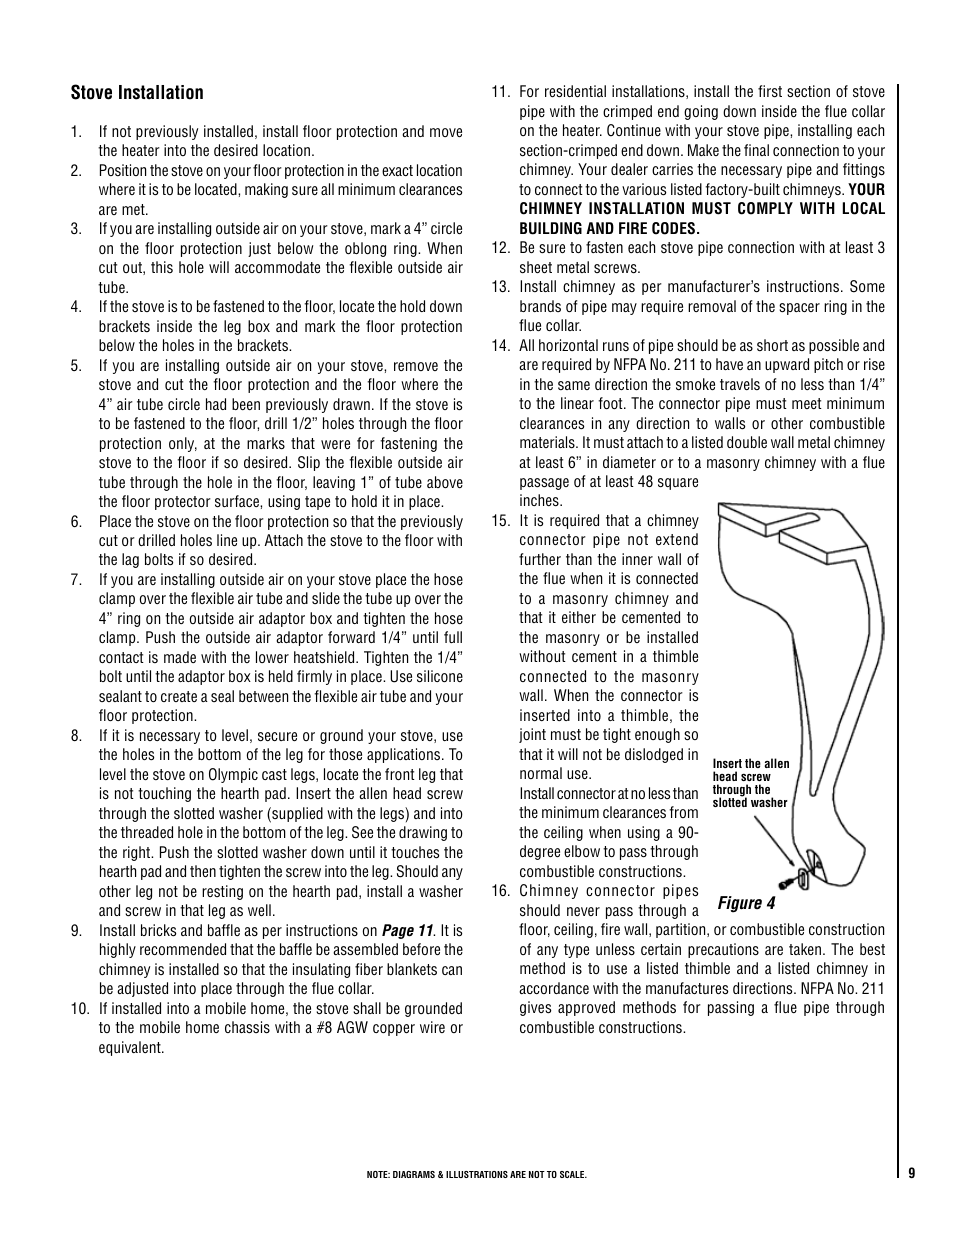 LG MODEL STRIKER S160 User Manual | Page 9 / 22